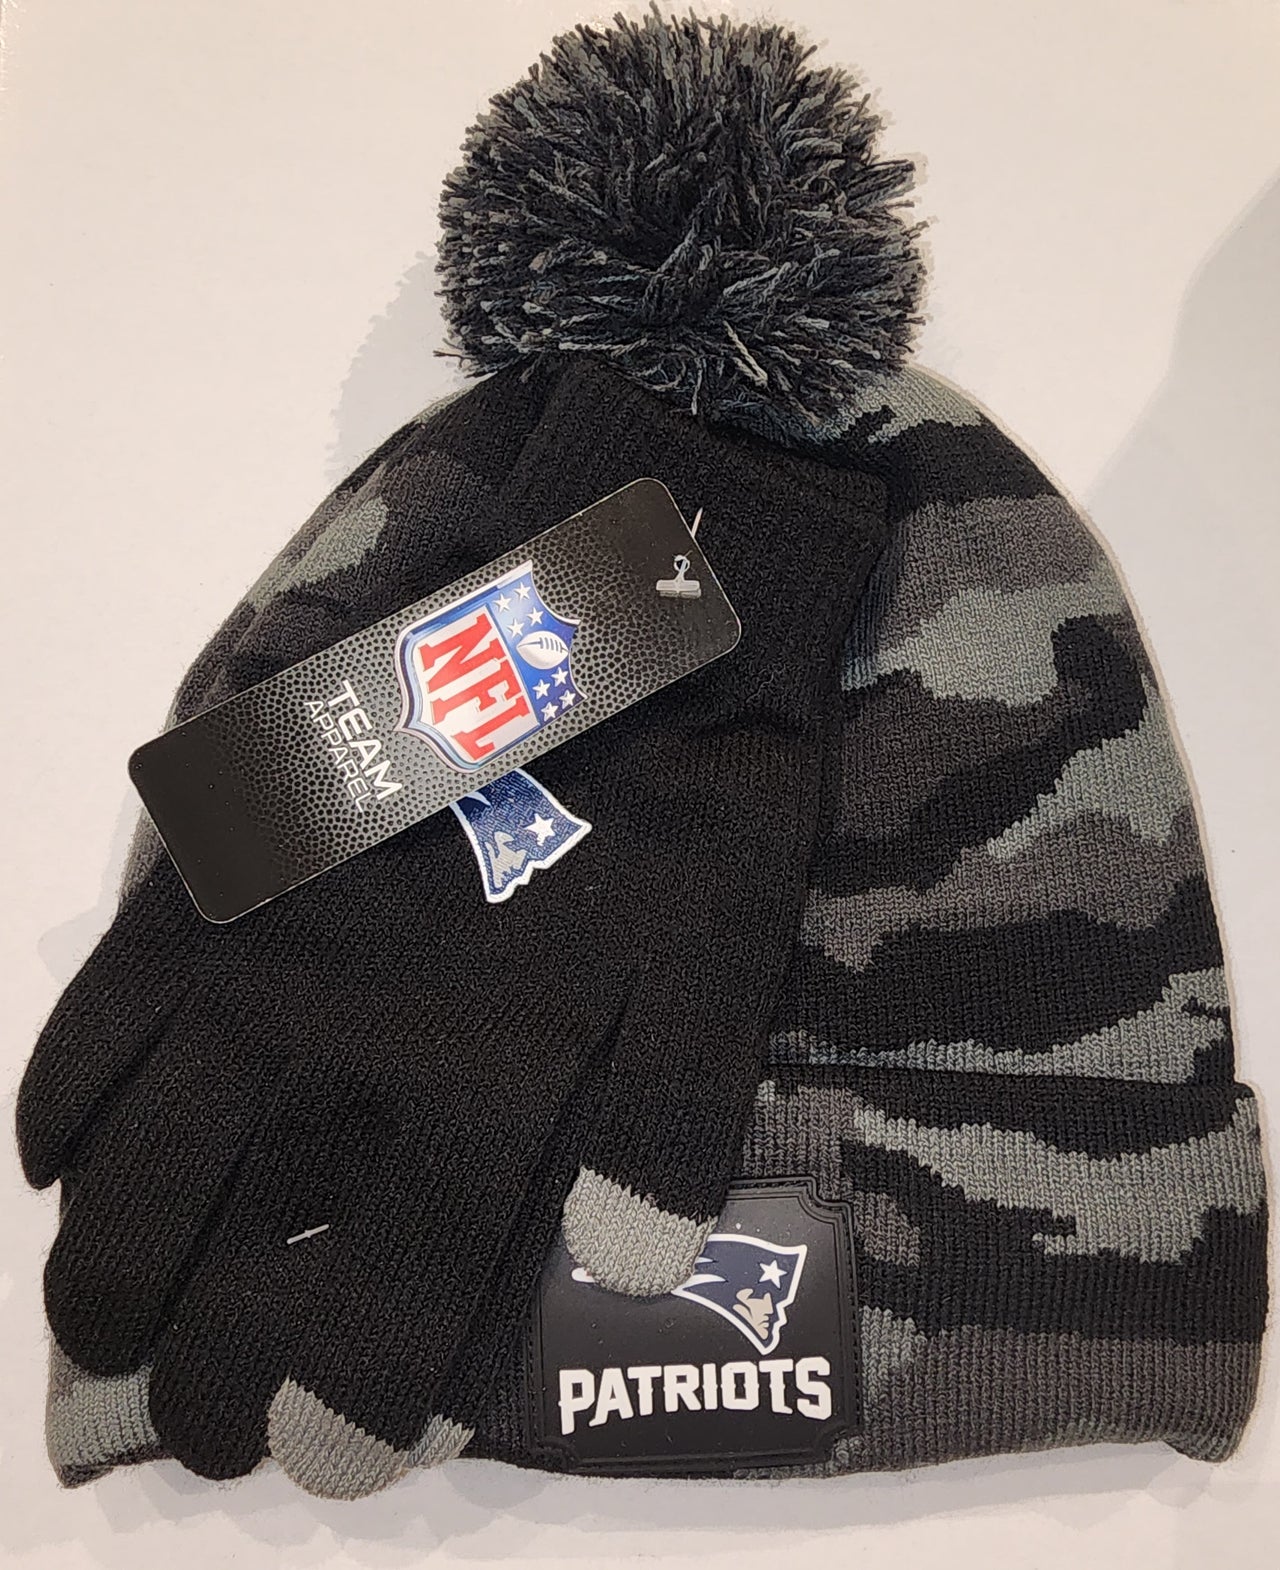 New England Patriots Camo Winter Hat & Glove Set